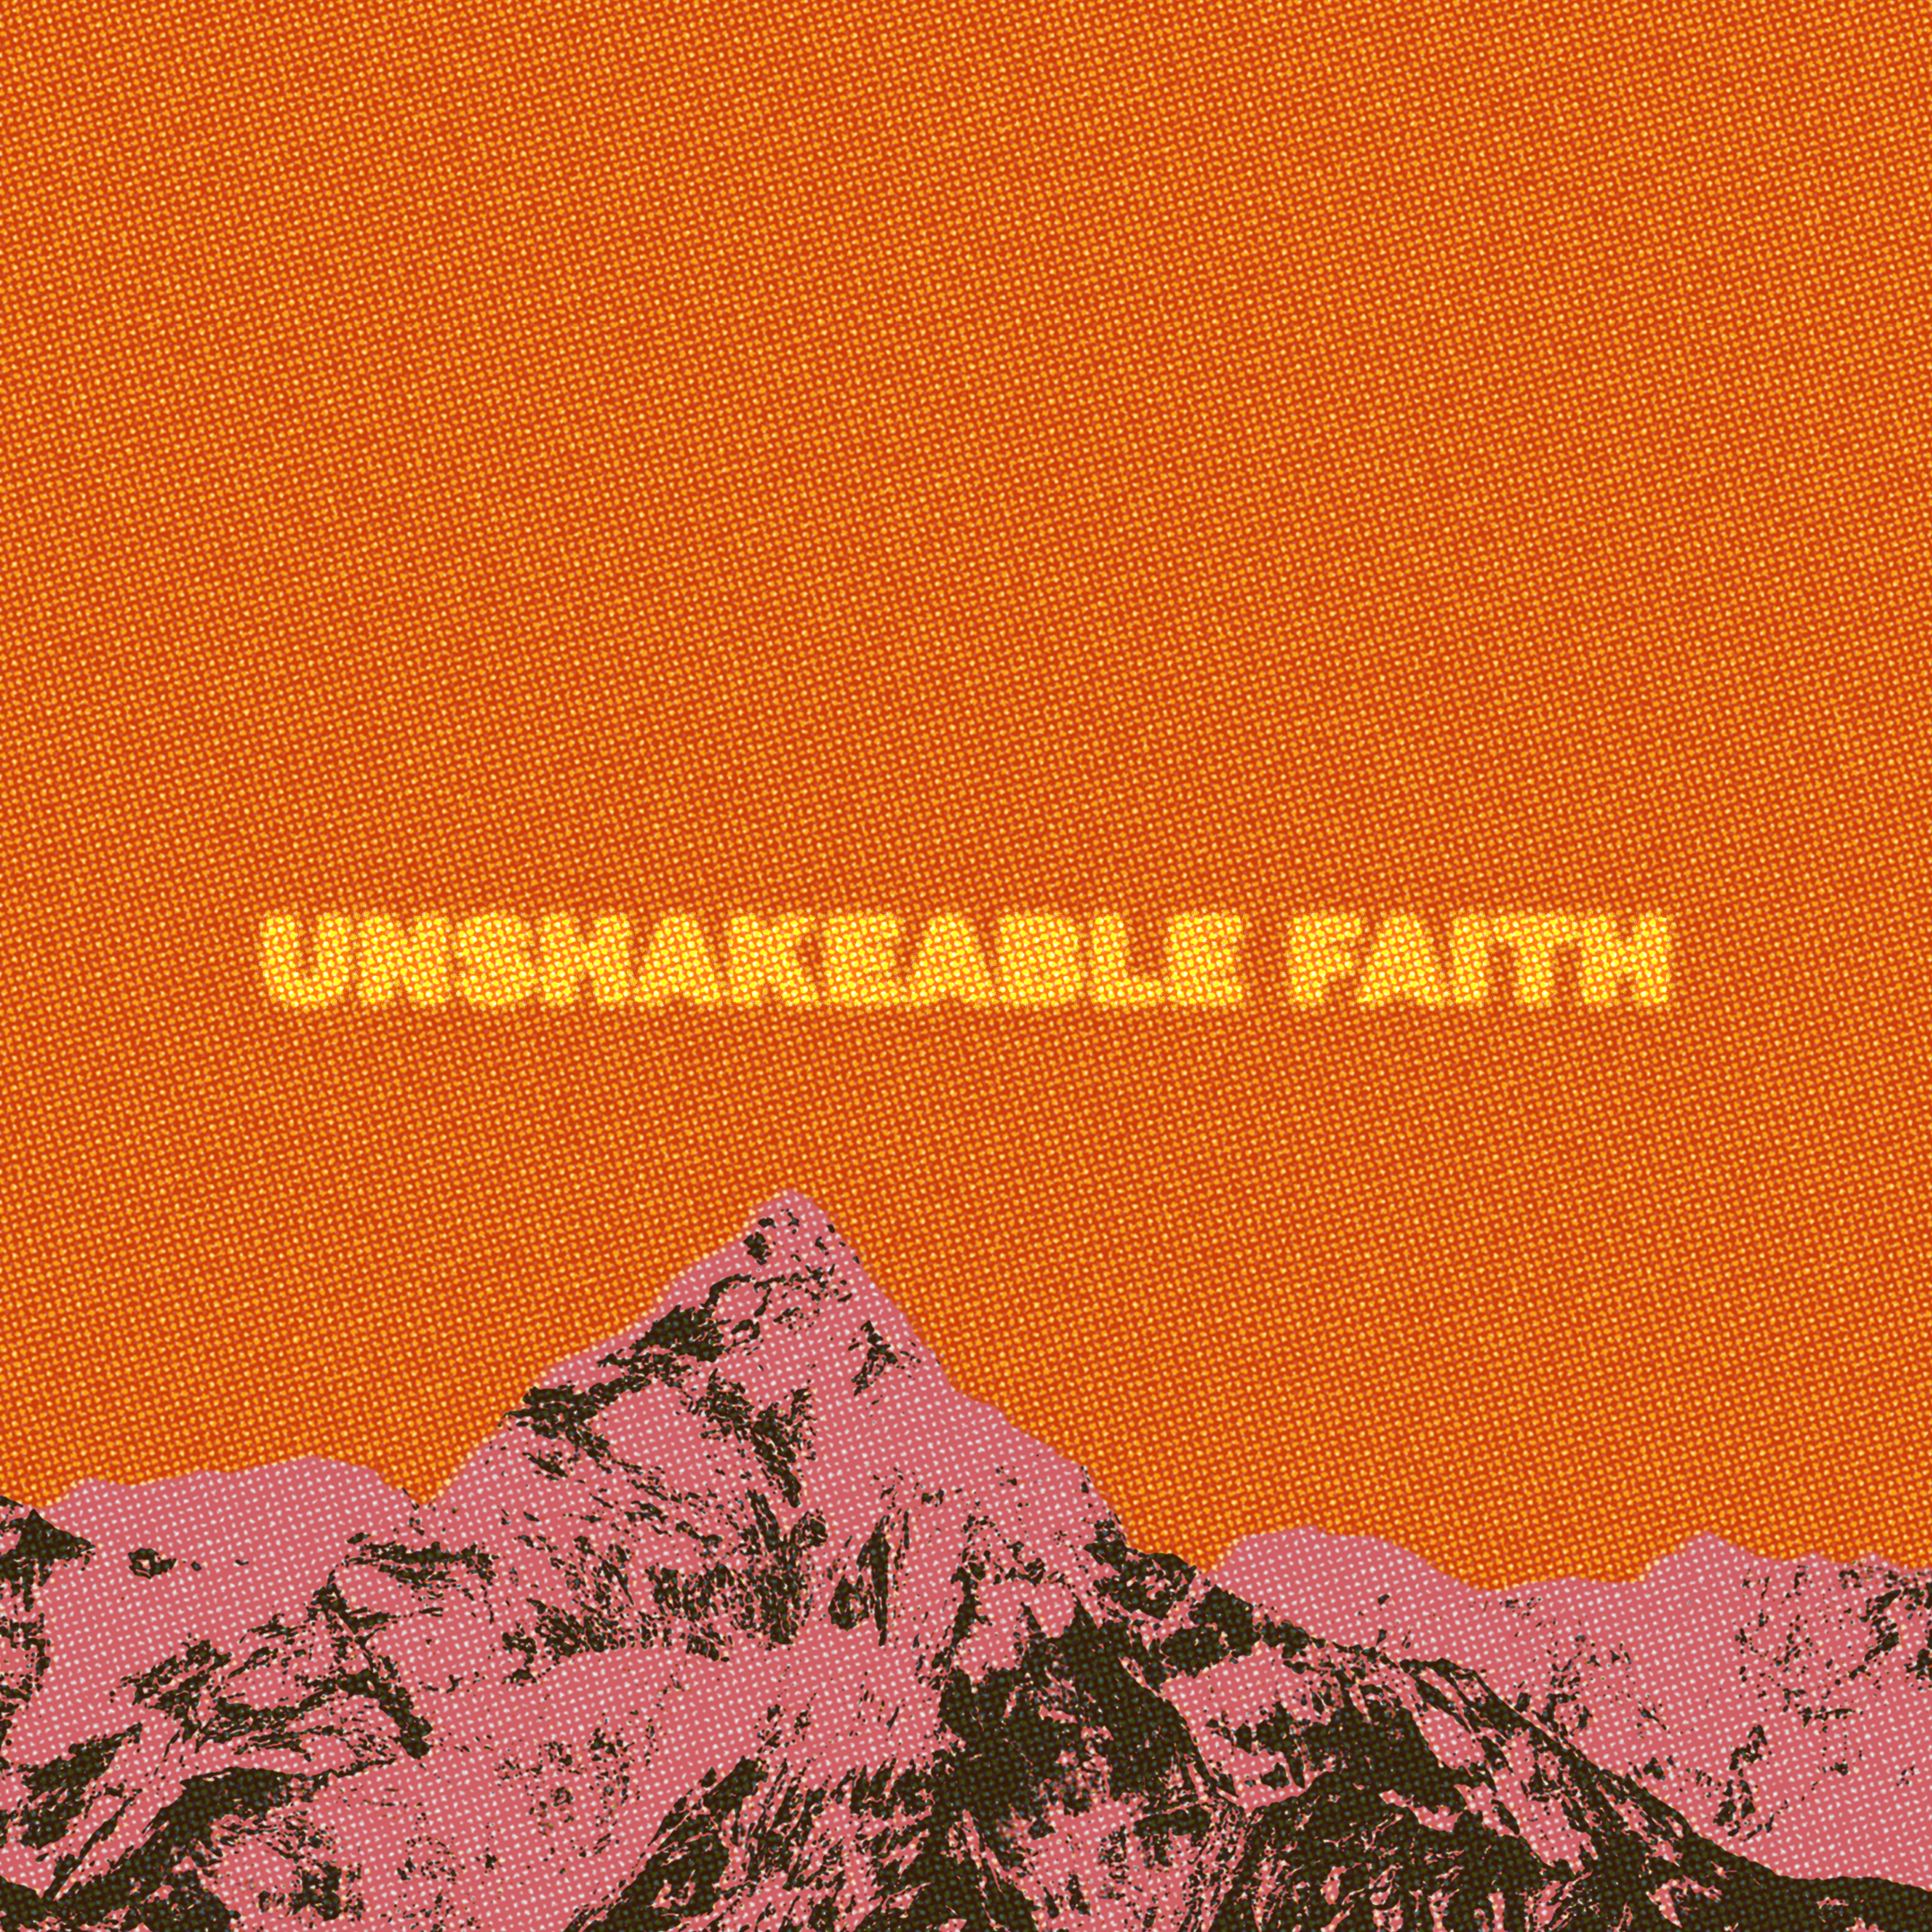 Unshakeable Faith